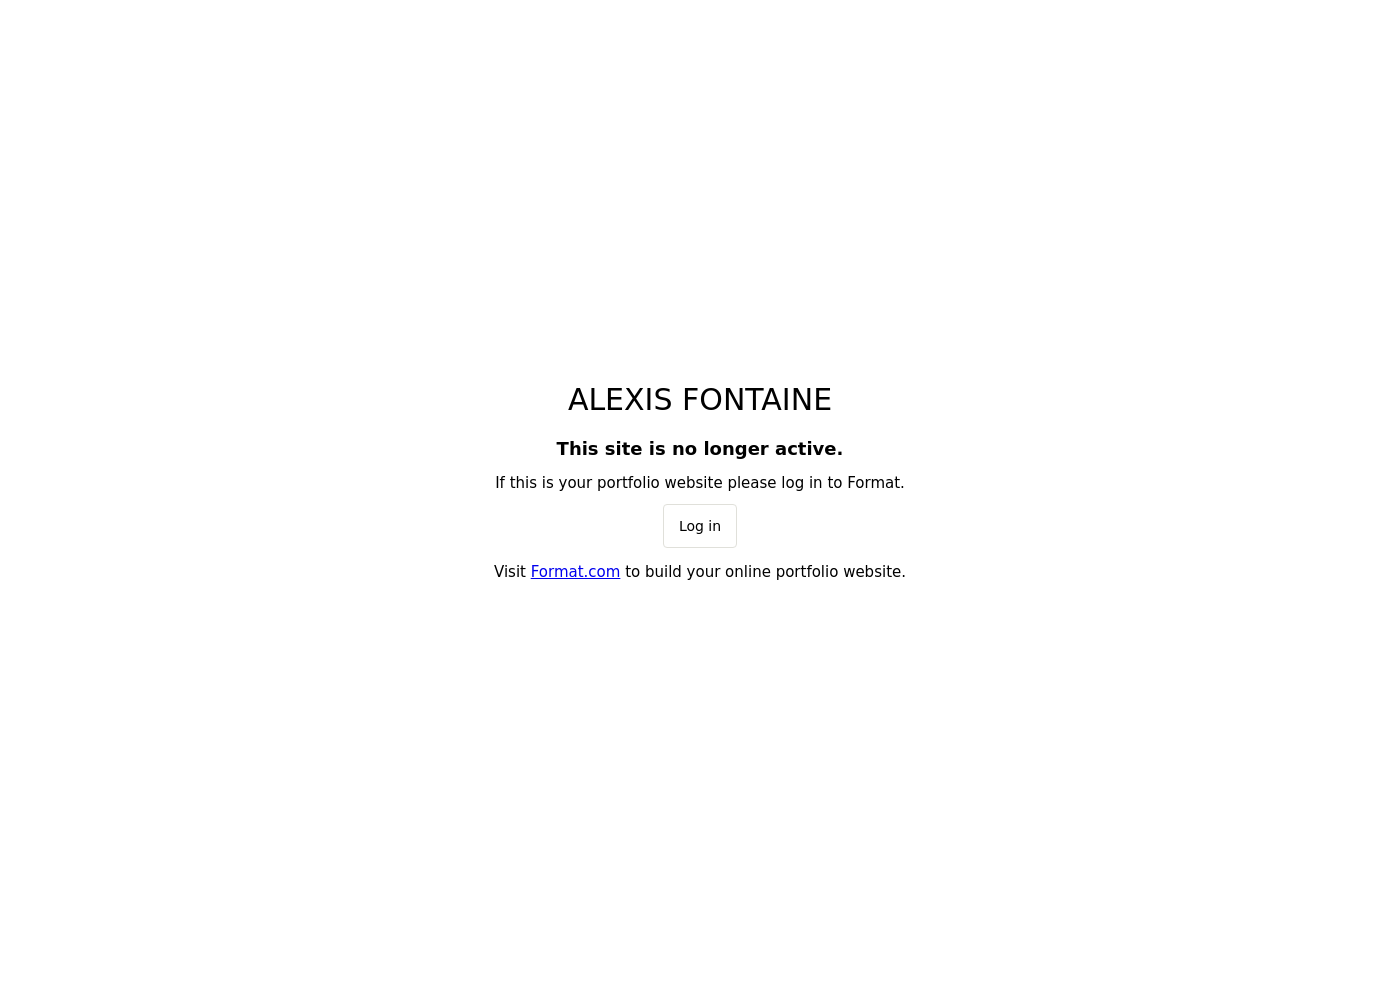 Alexis Fontaine desktop